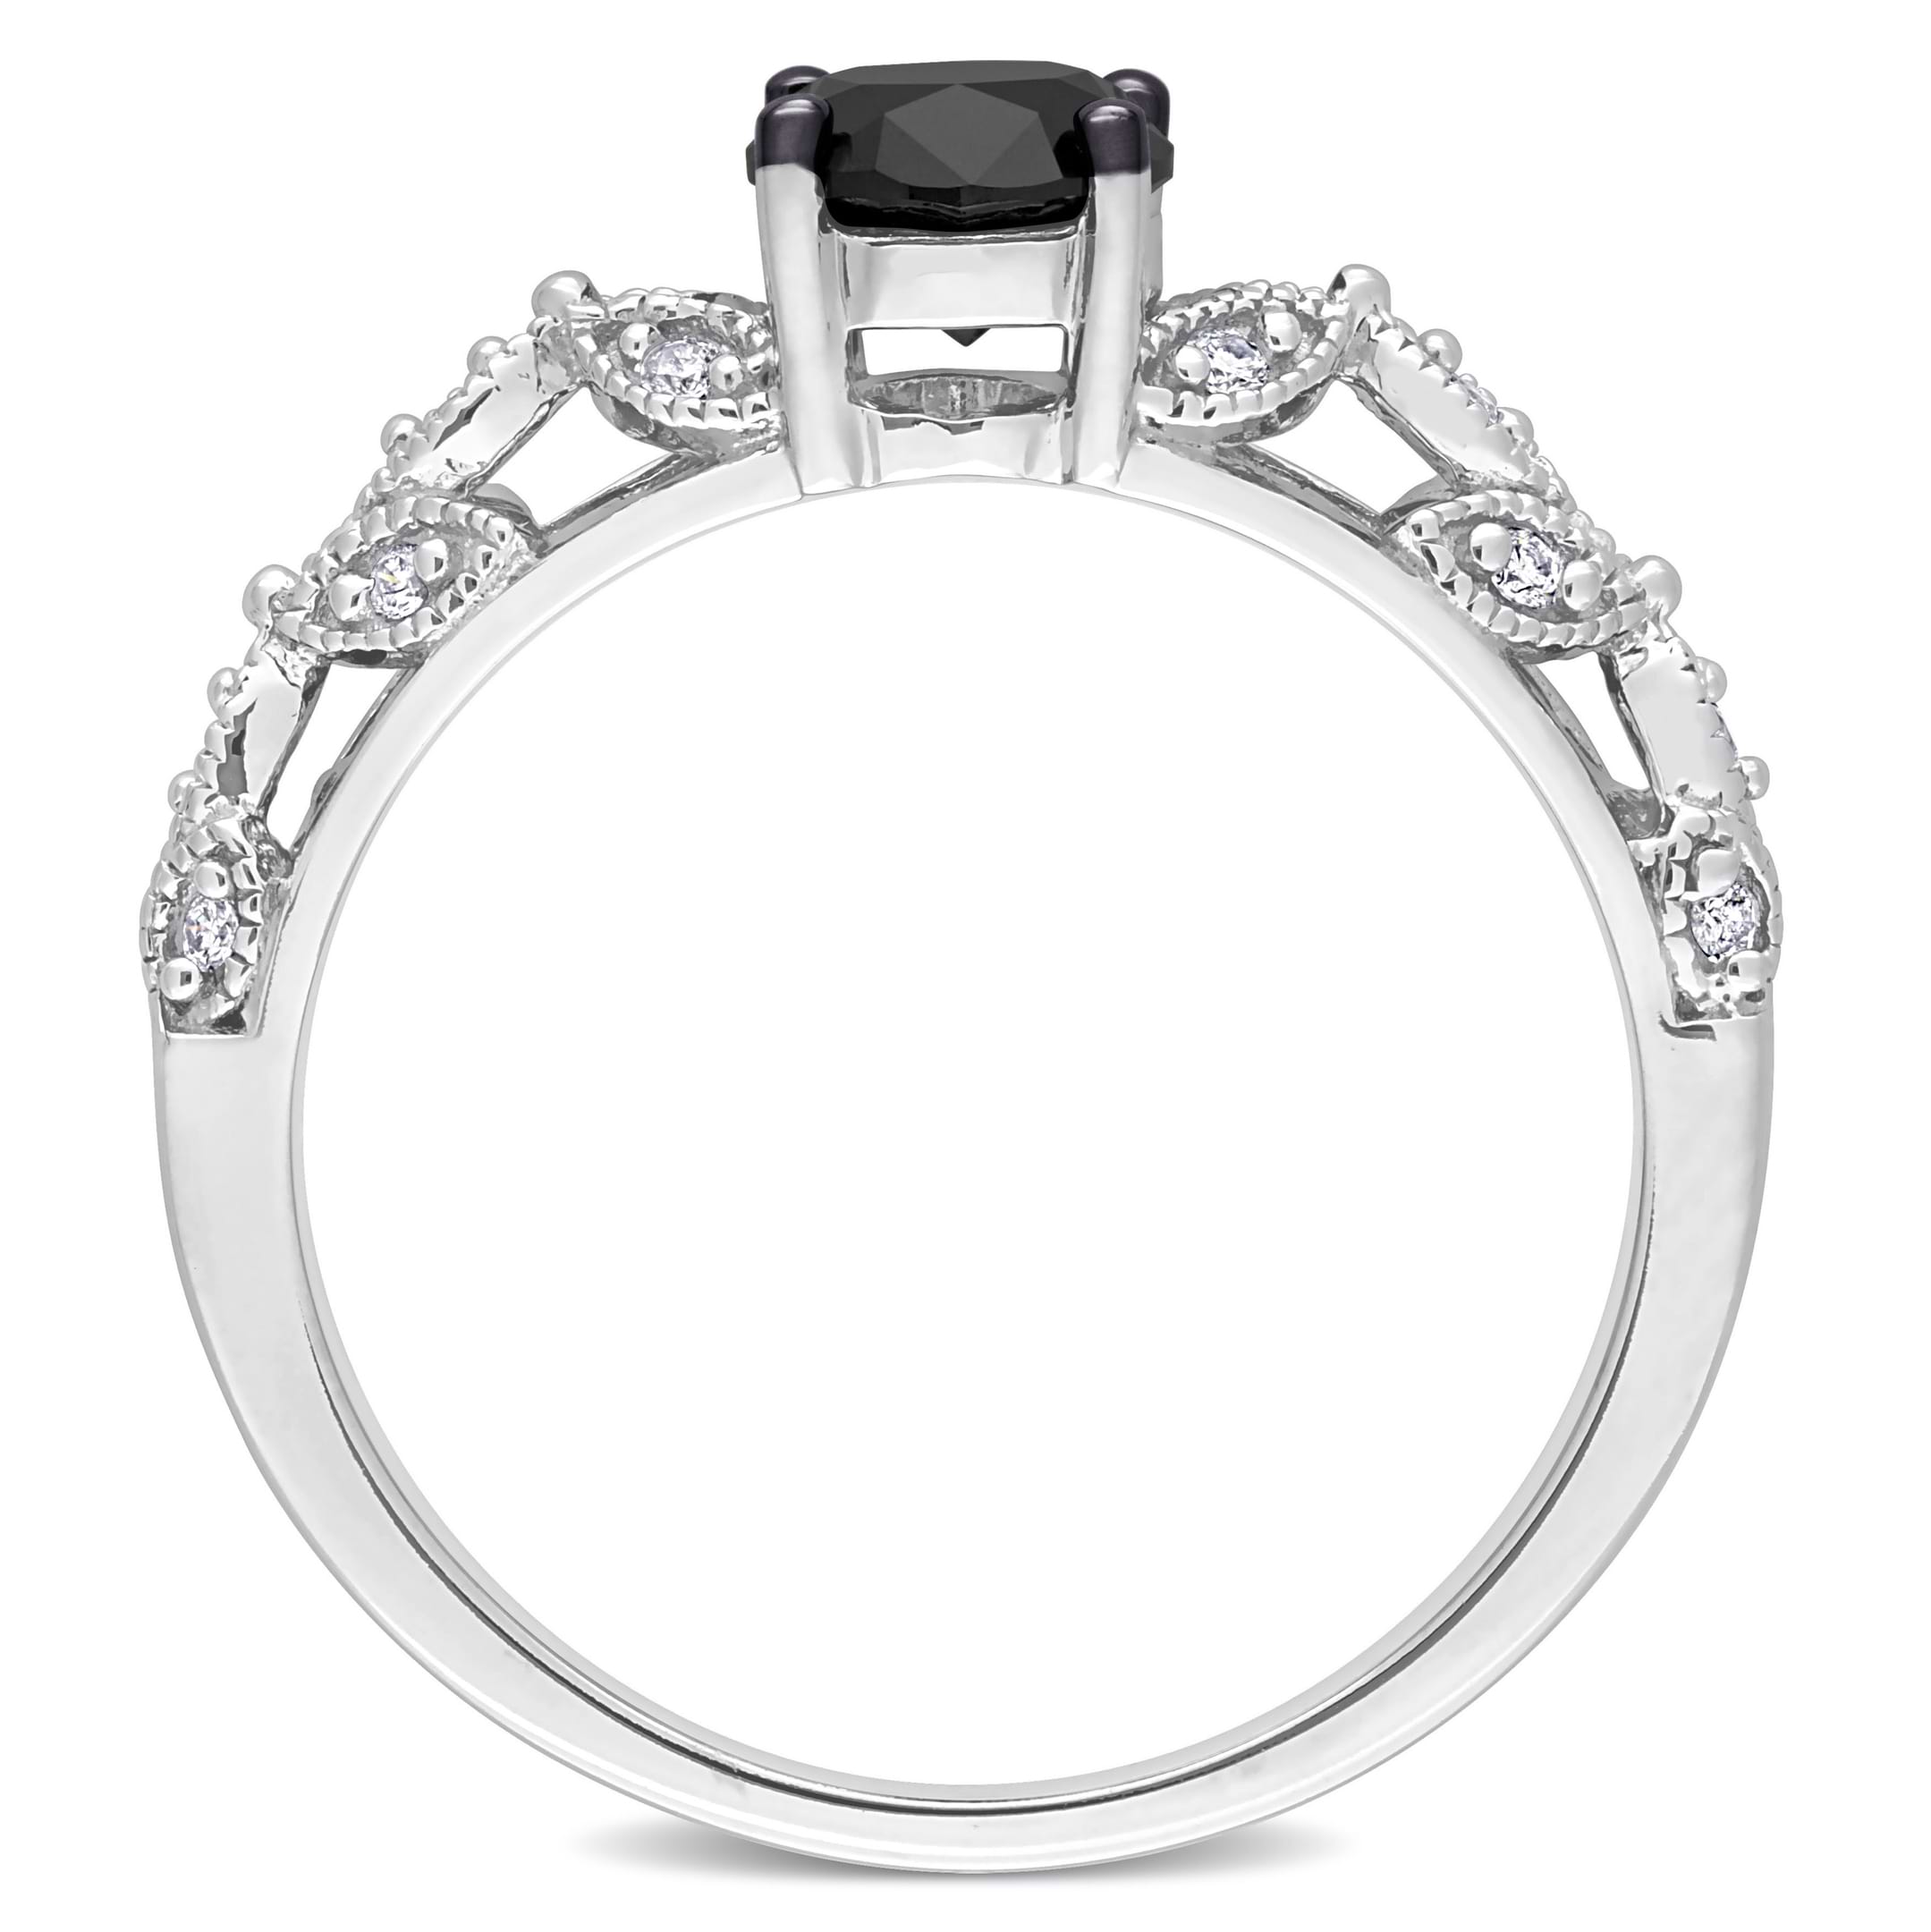 Oval Black and Round White Diamond Fashion Ring 14k W. Gold (1.03ct)